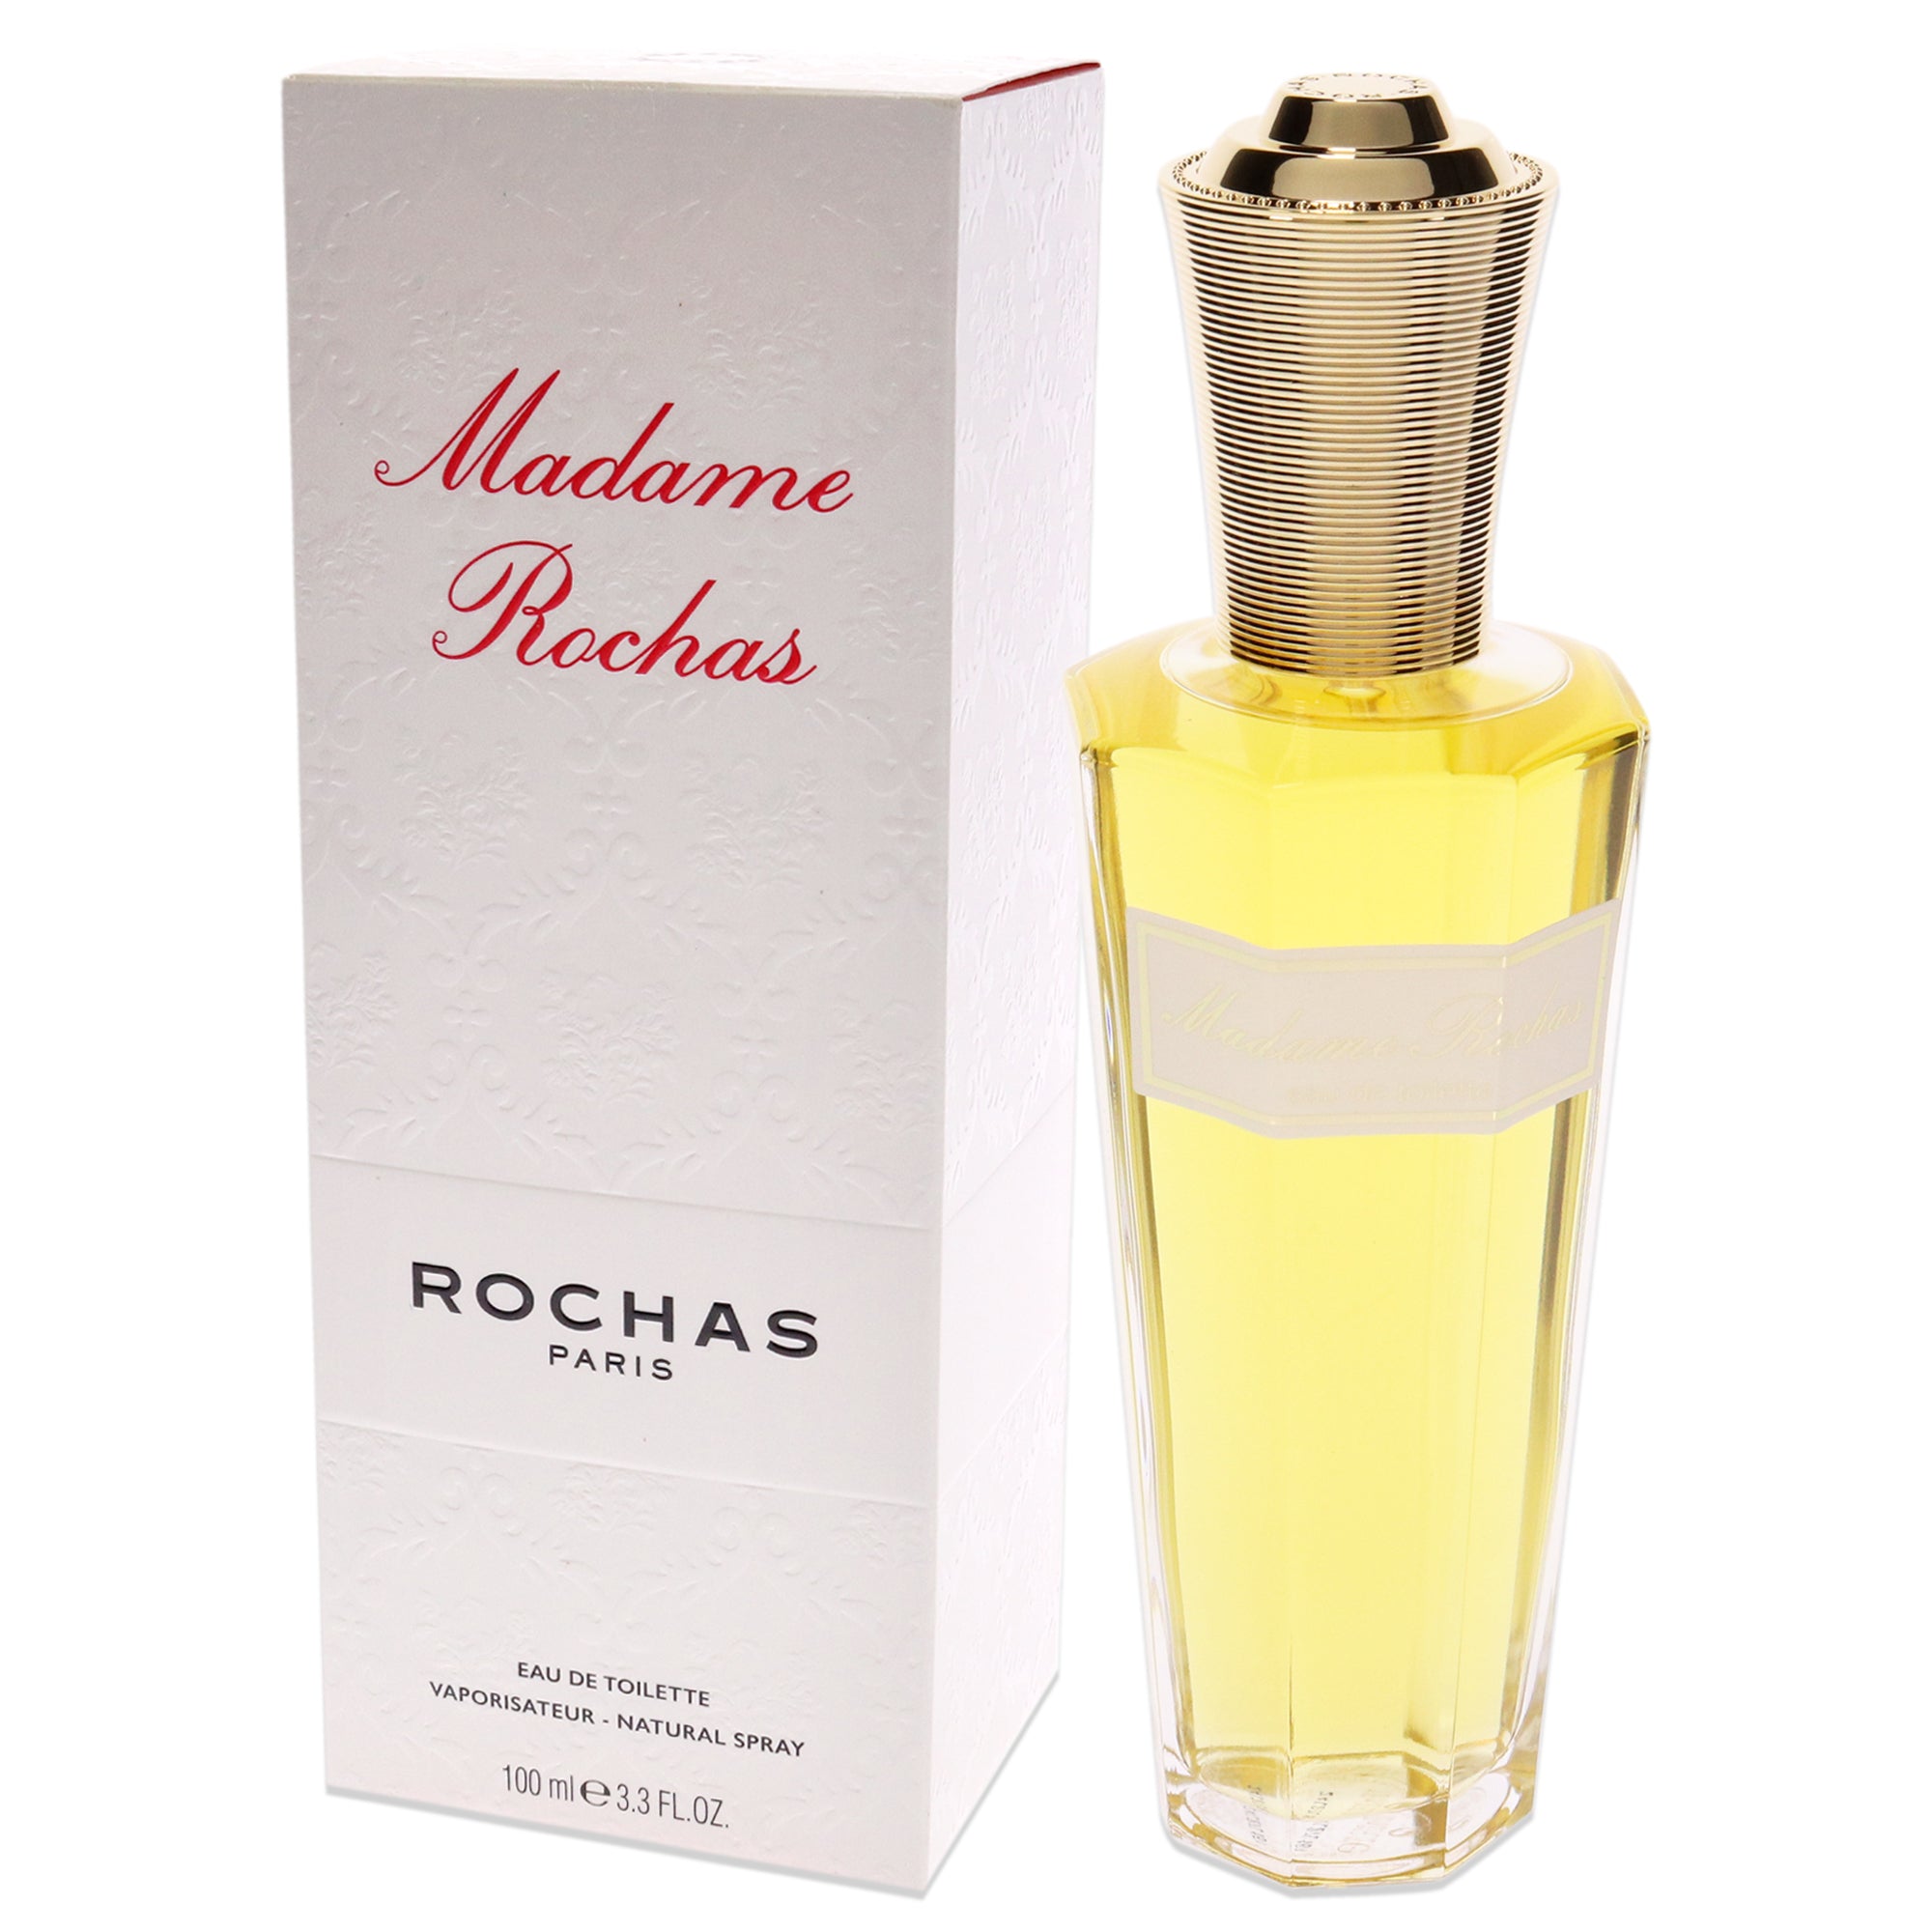 Madame Rochas by Rochas for Women - 3.4 oz EDT Spray